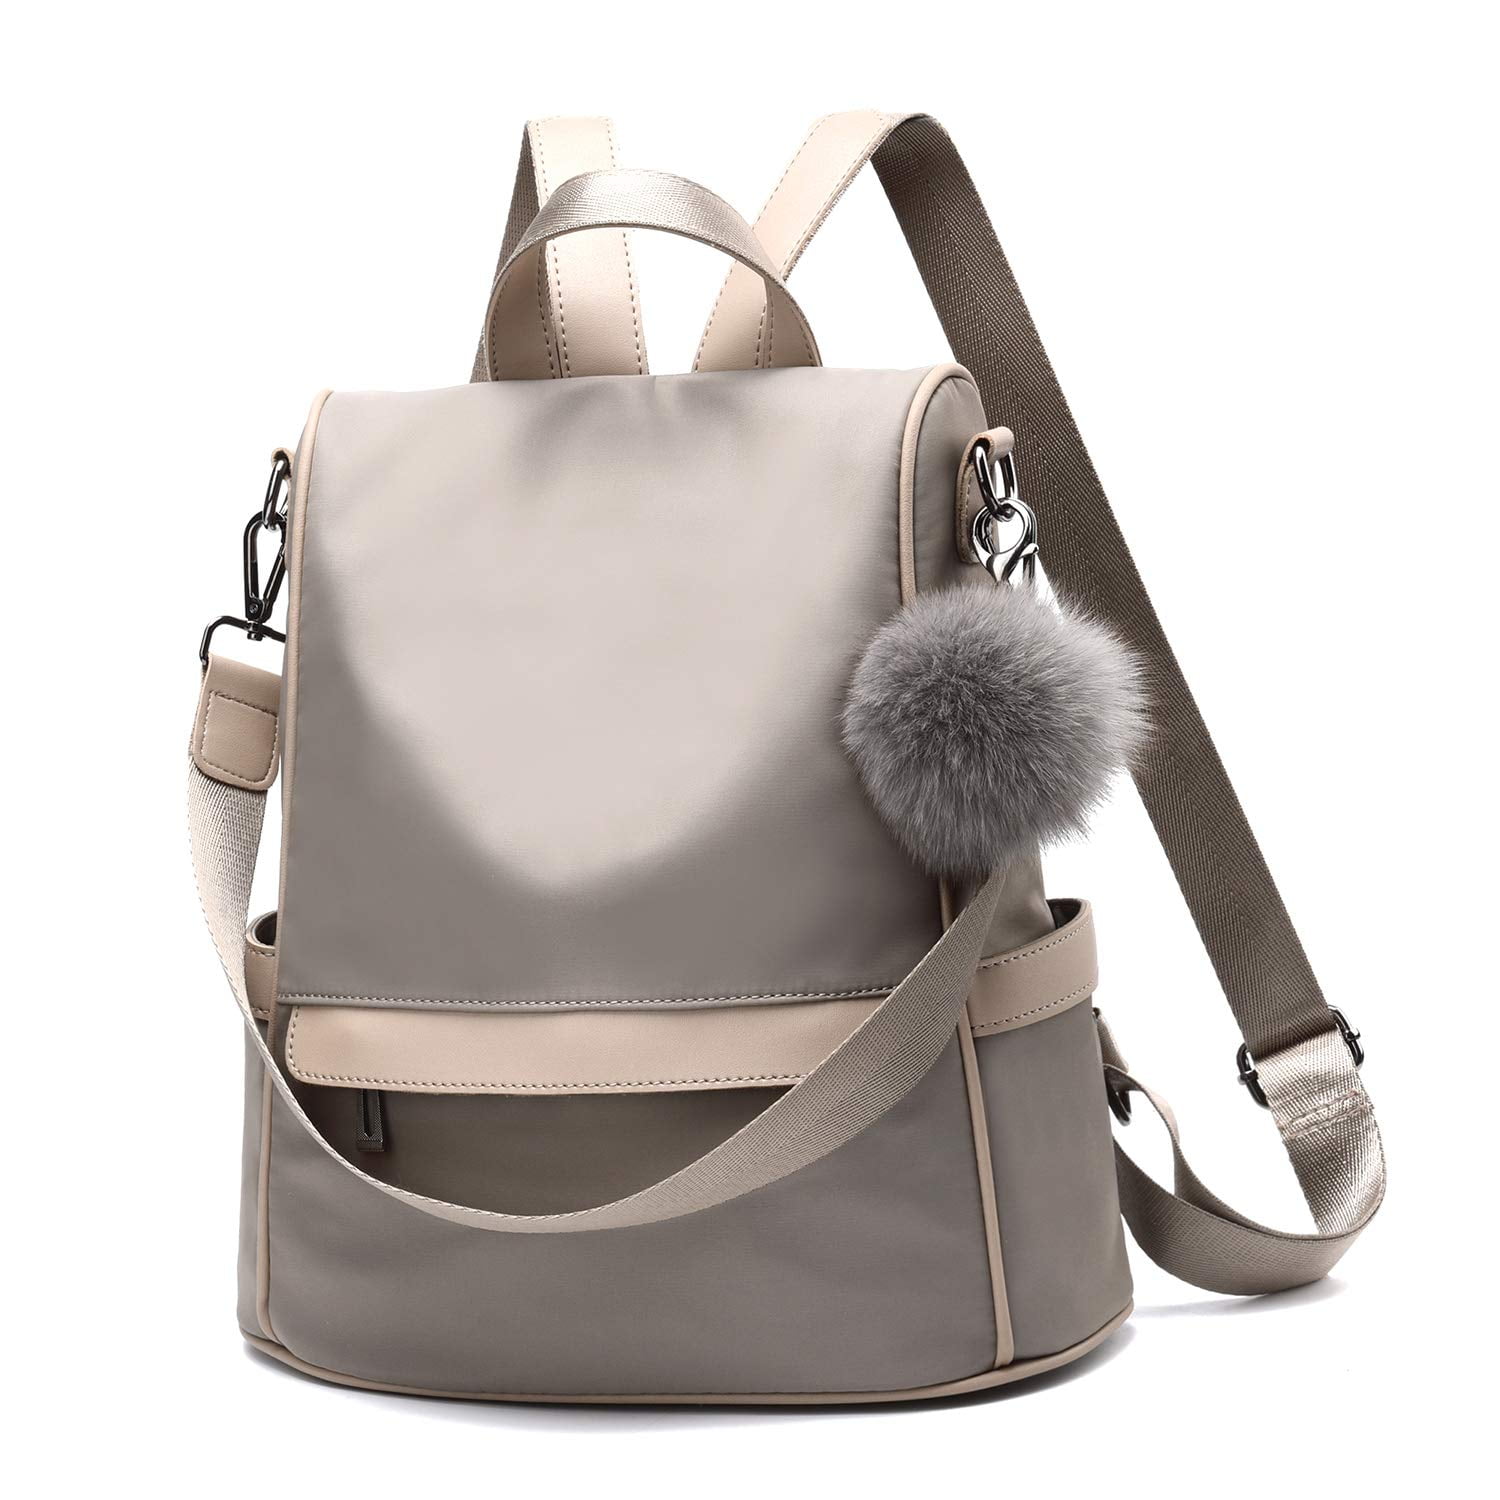 New Womens Nylon Casual Backpack Fashion Travel Bag Shoulder School Bag Handbag